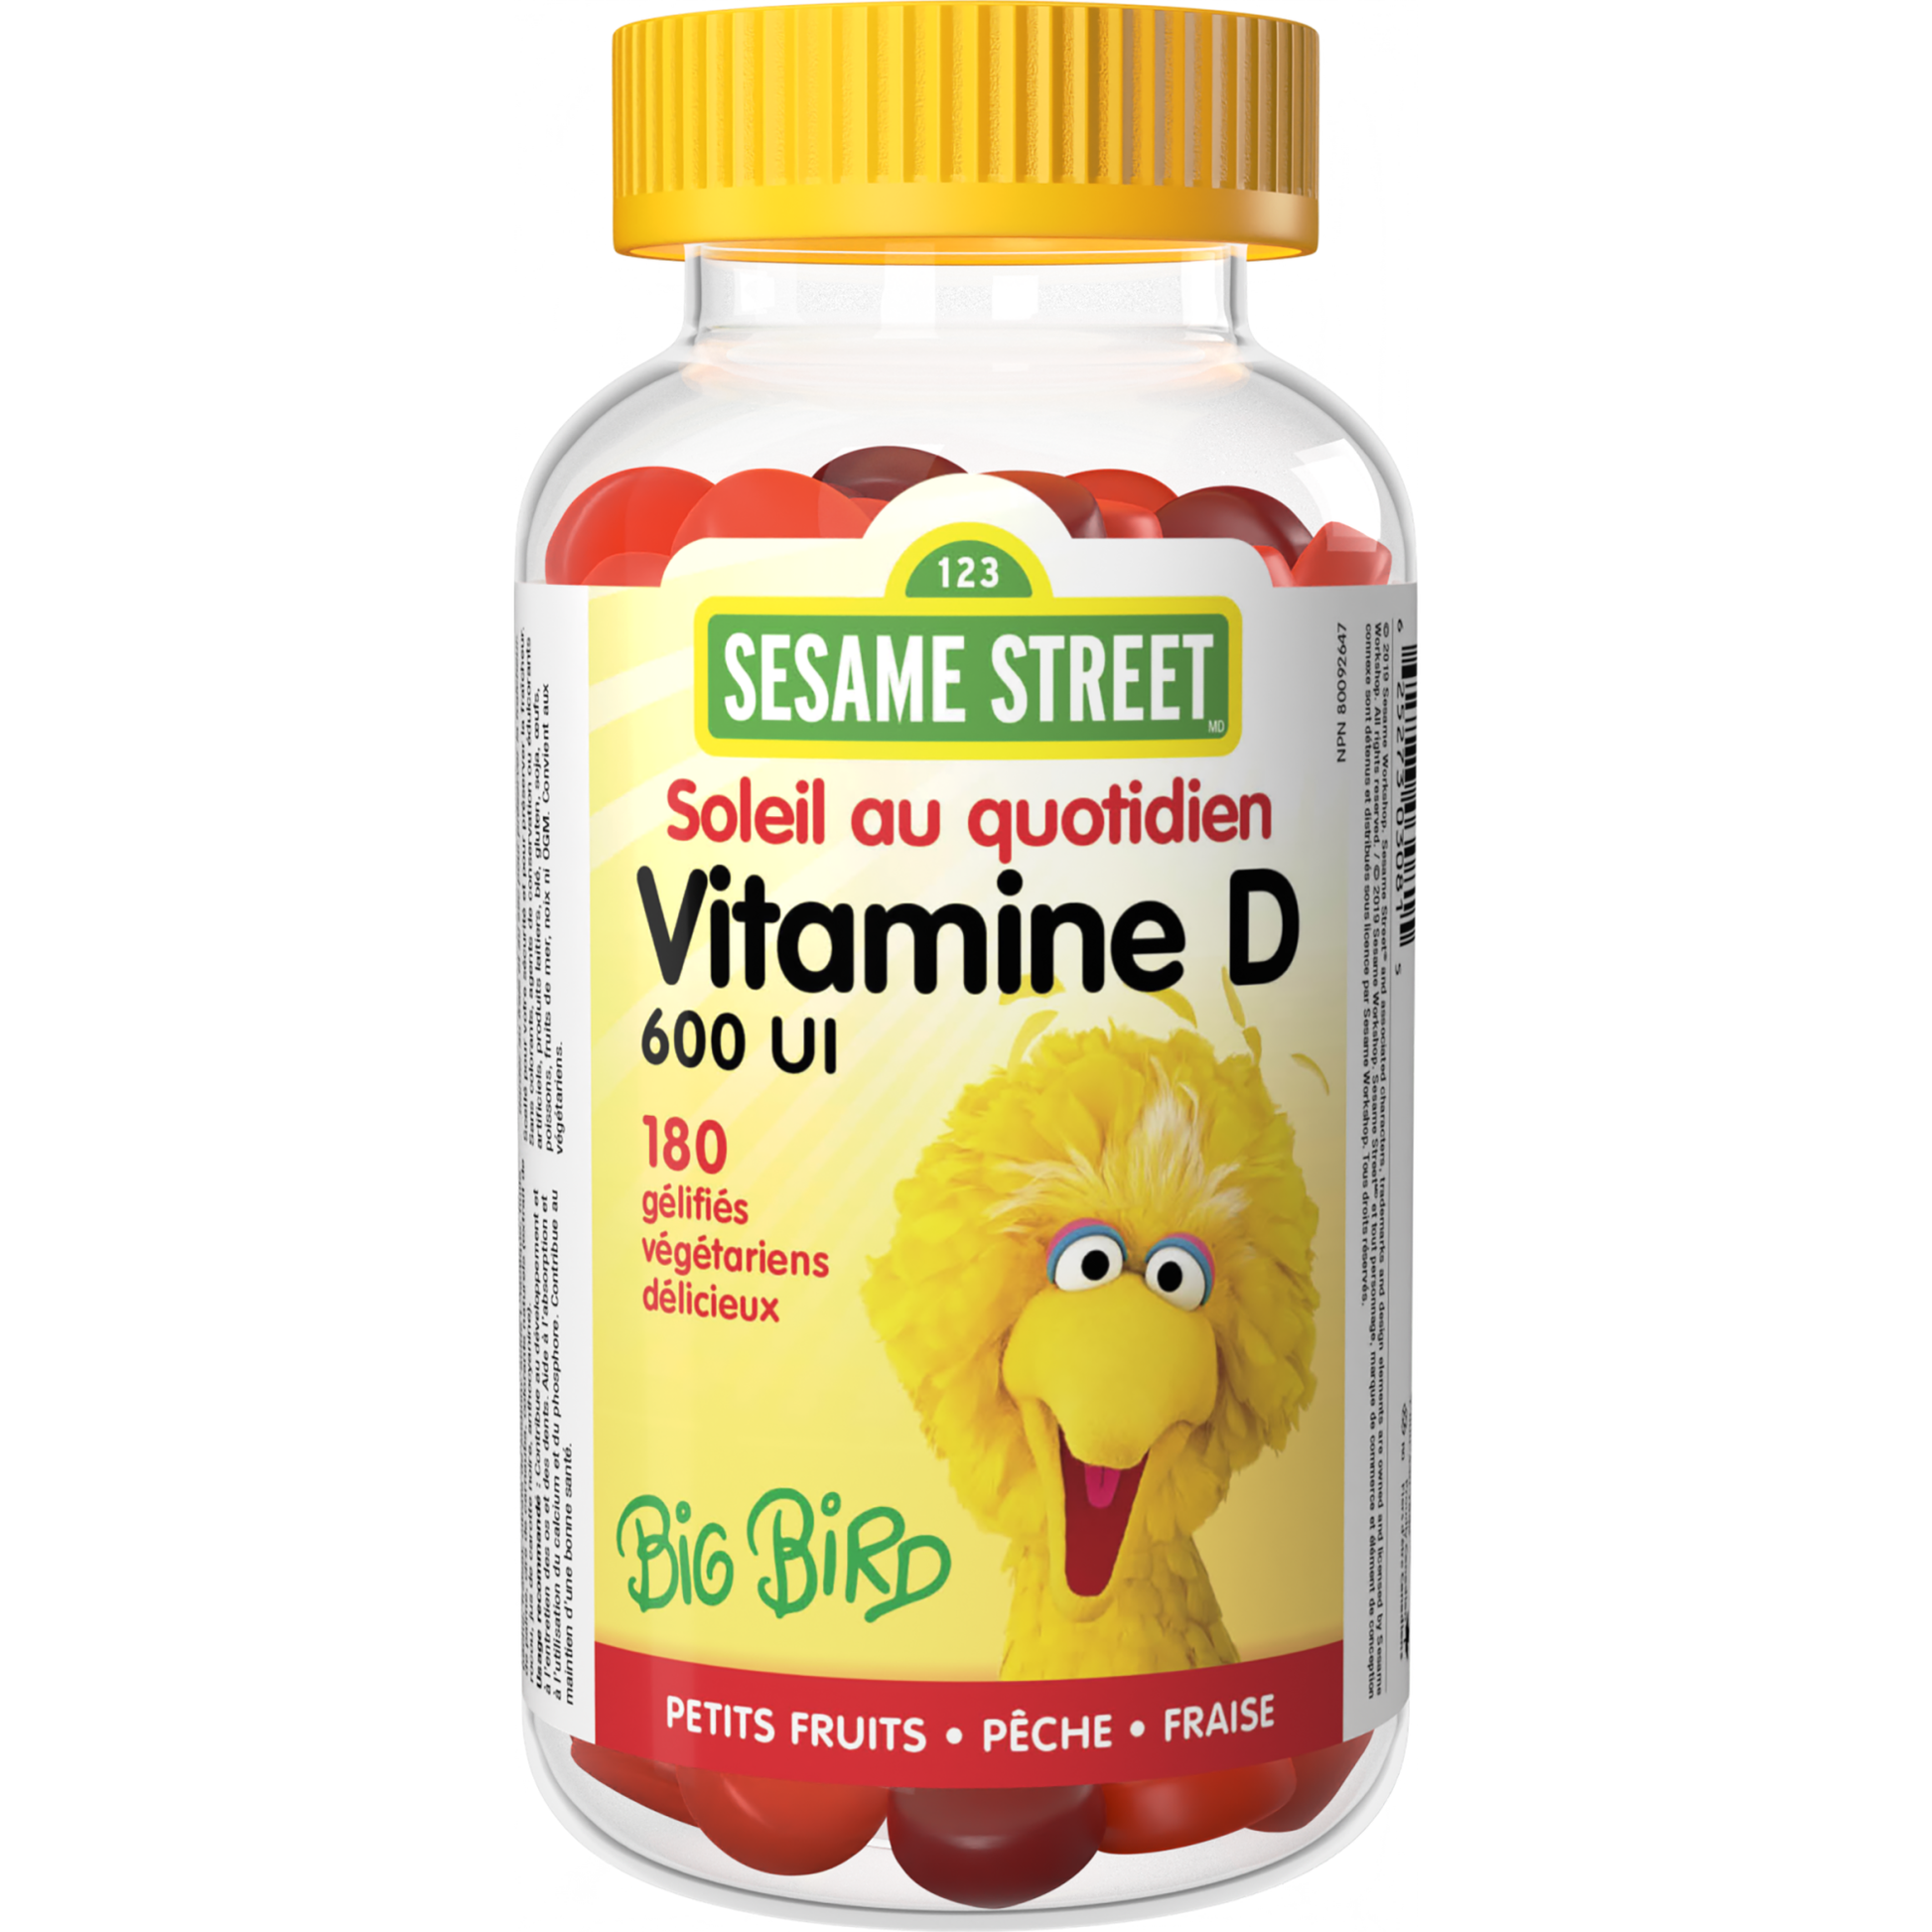 Vitamine D3 600 UI petits fruits • pêche • fraise for Sesame Street®|v|hi-res|WN3081